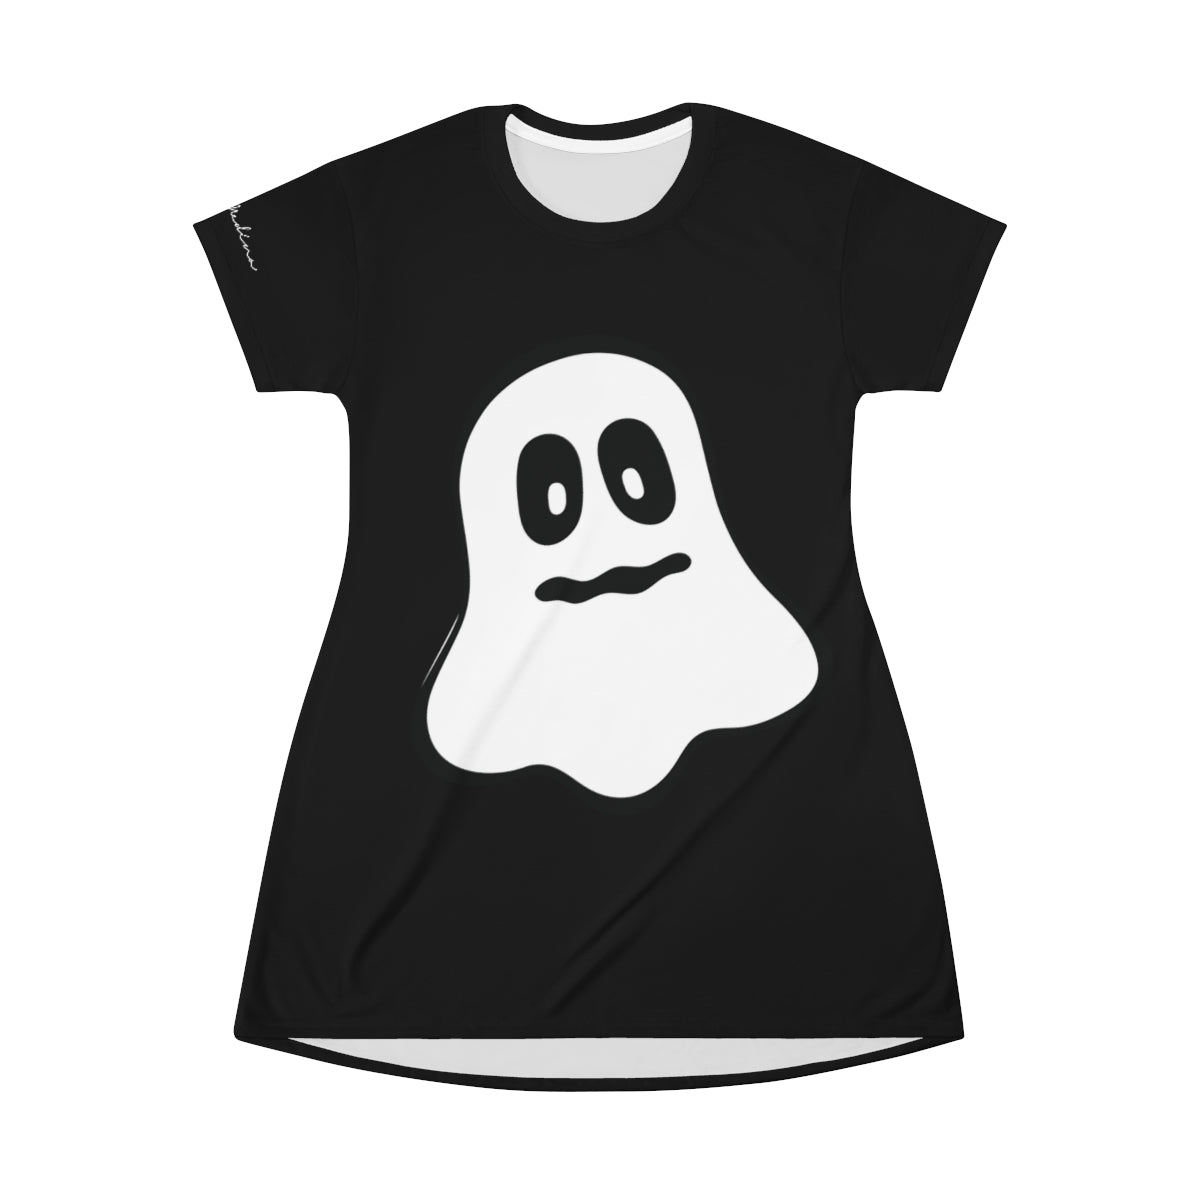 Shirtdress, Black Baby Ghost